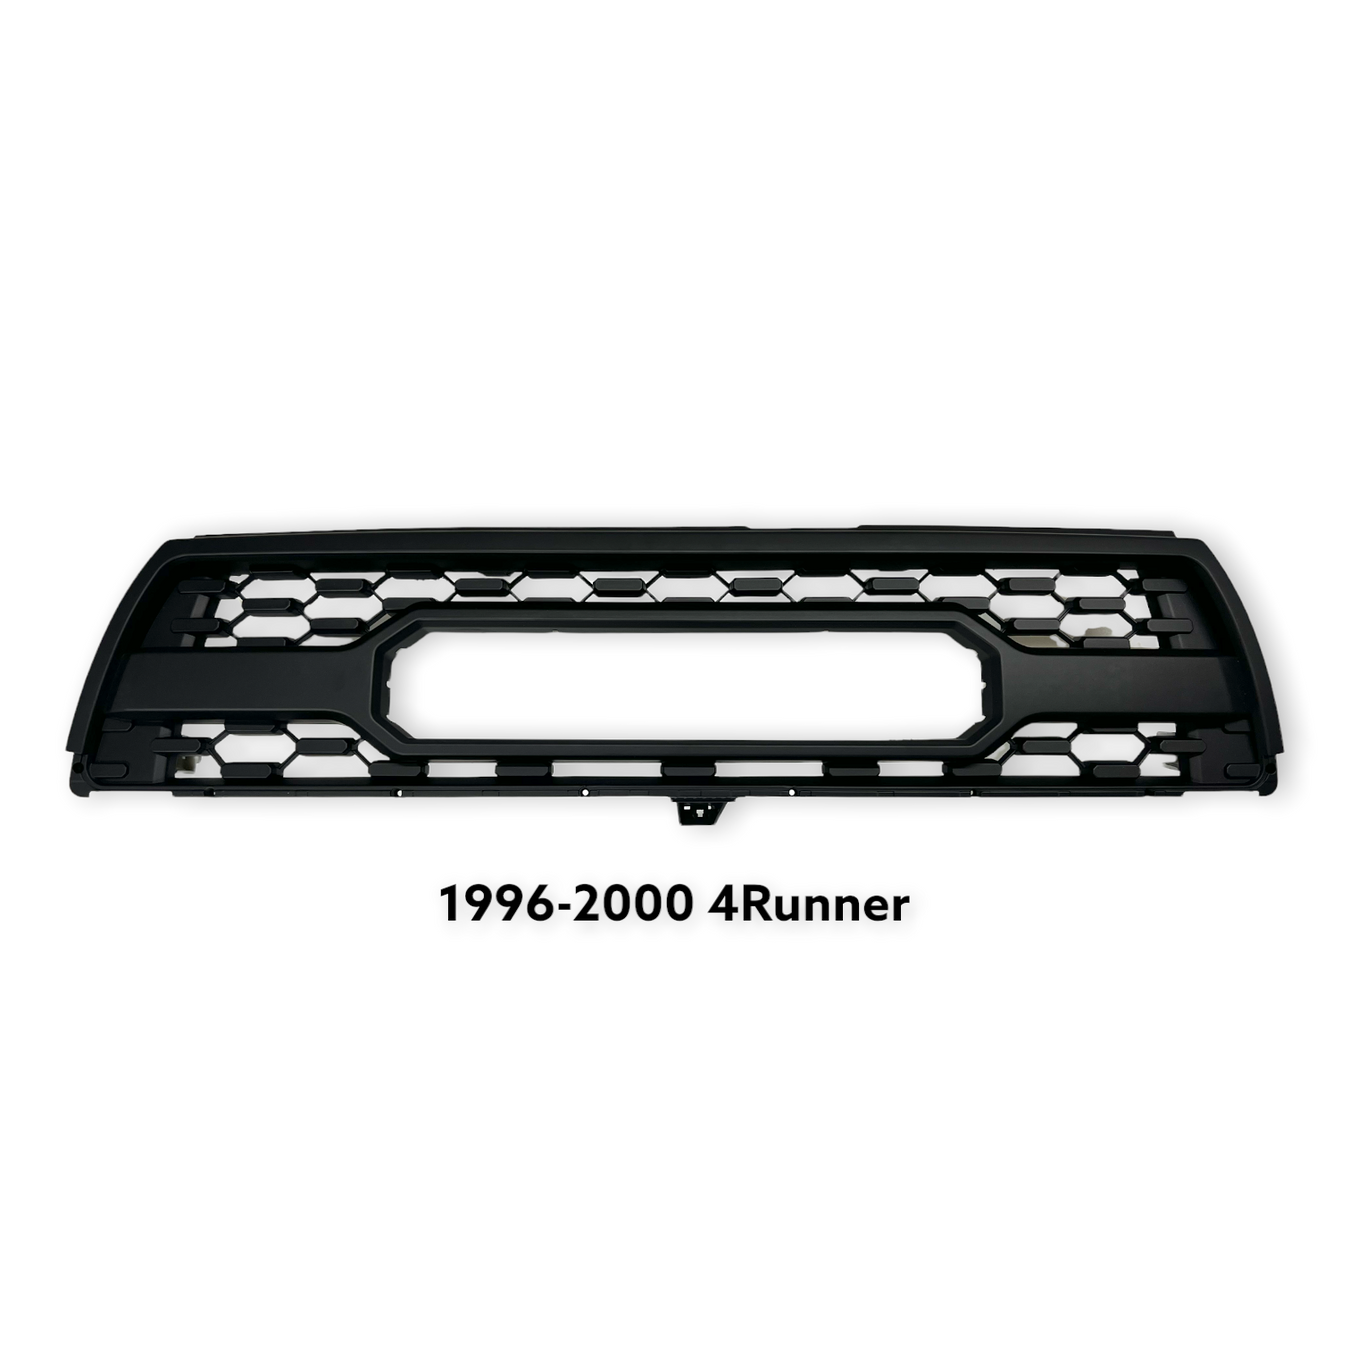 1996-2000 4Runner - Grilles